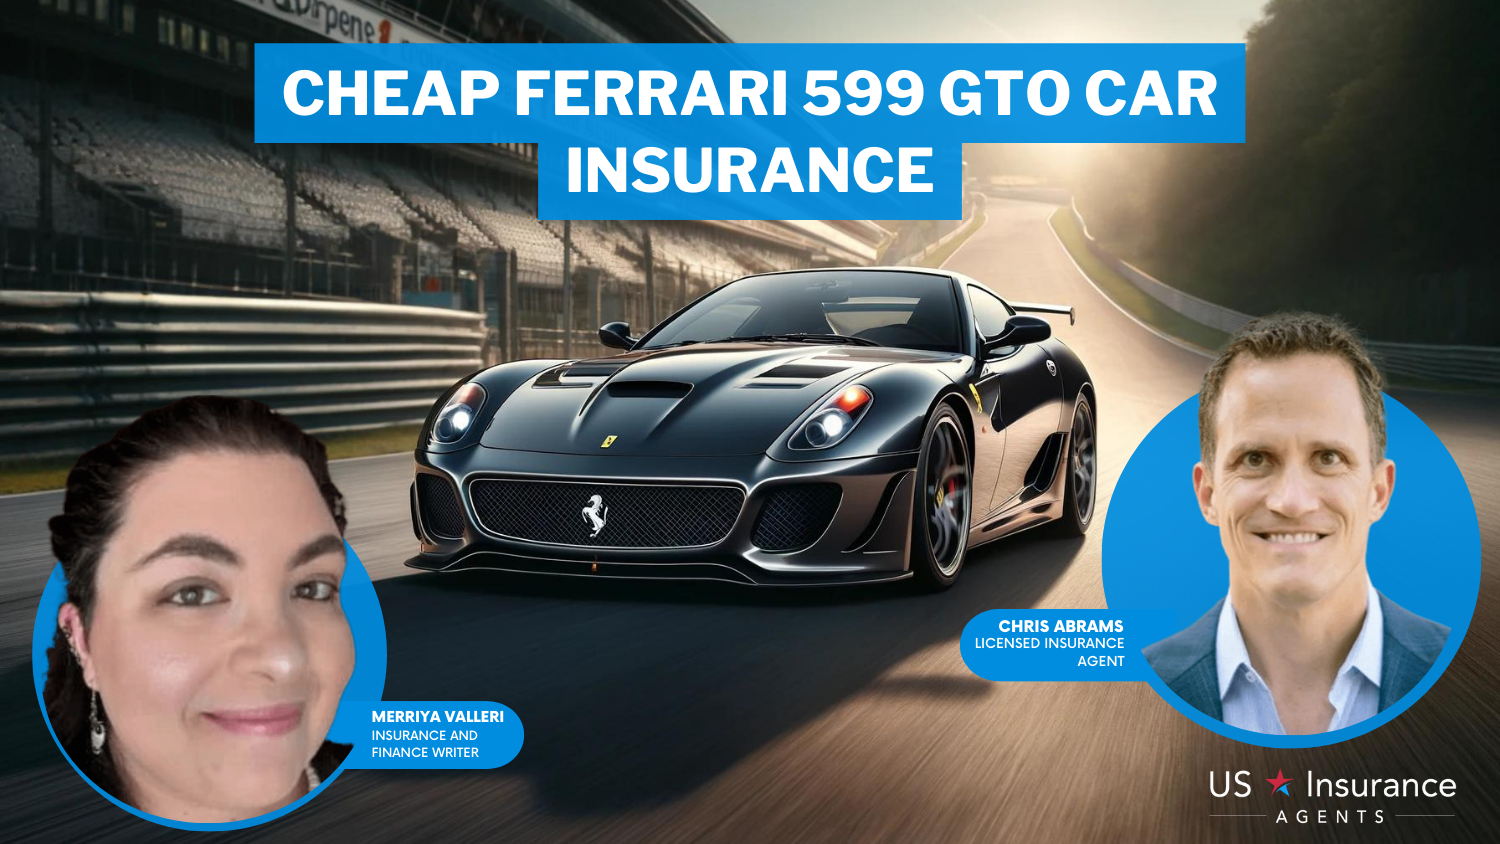 Cheap Ferrari 599 GTO Car Insurance: Erie, USAA, and Safeco